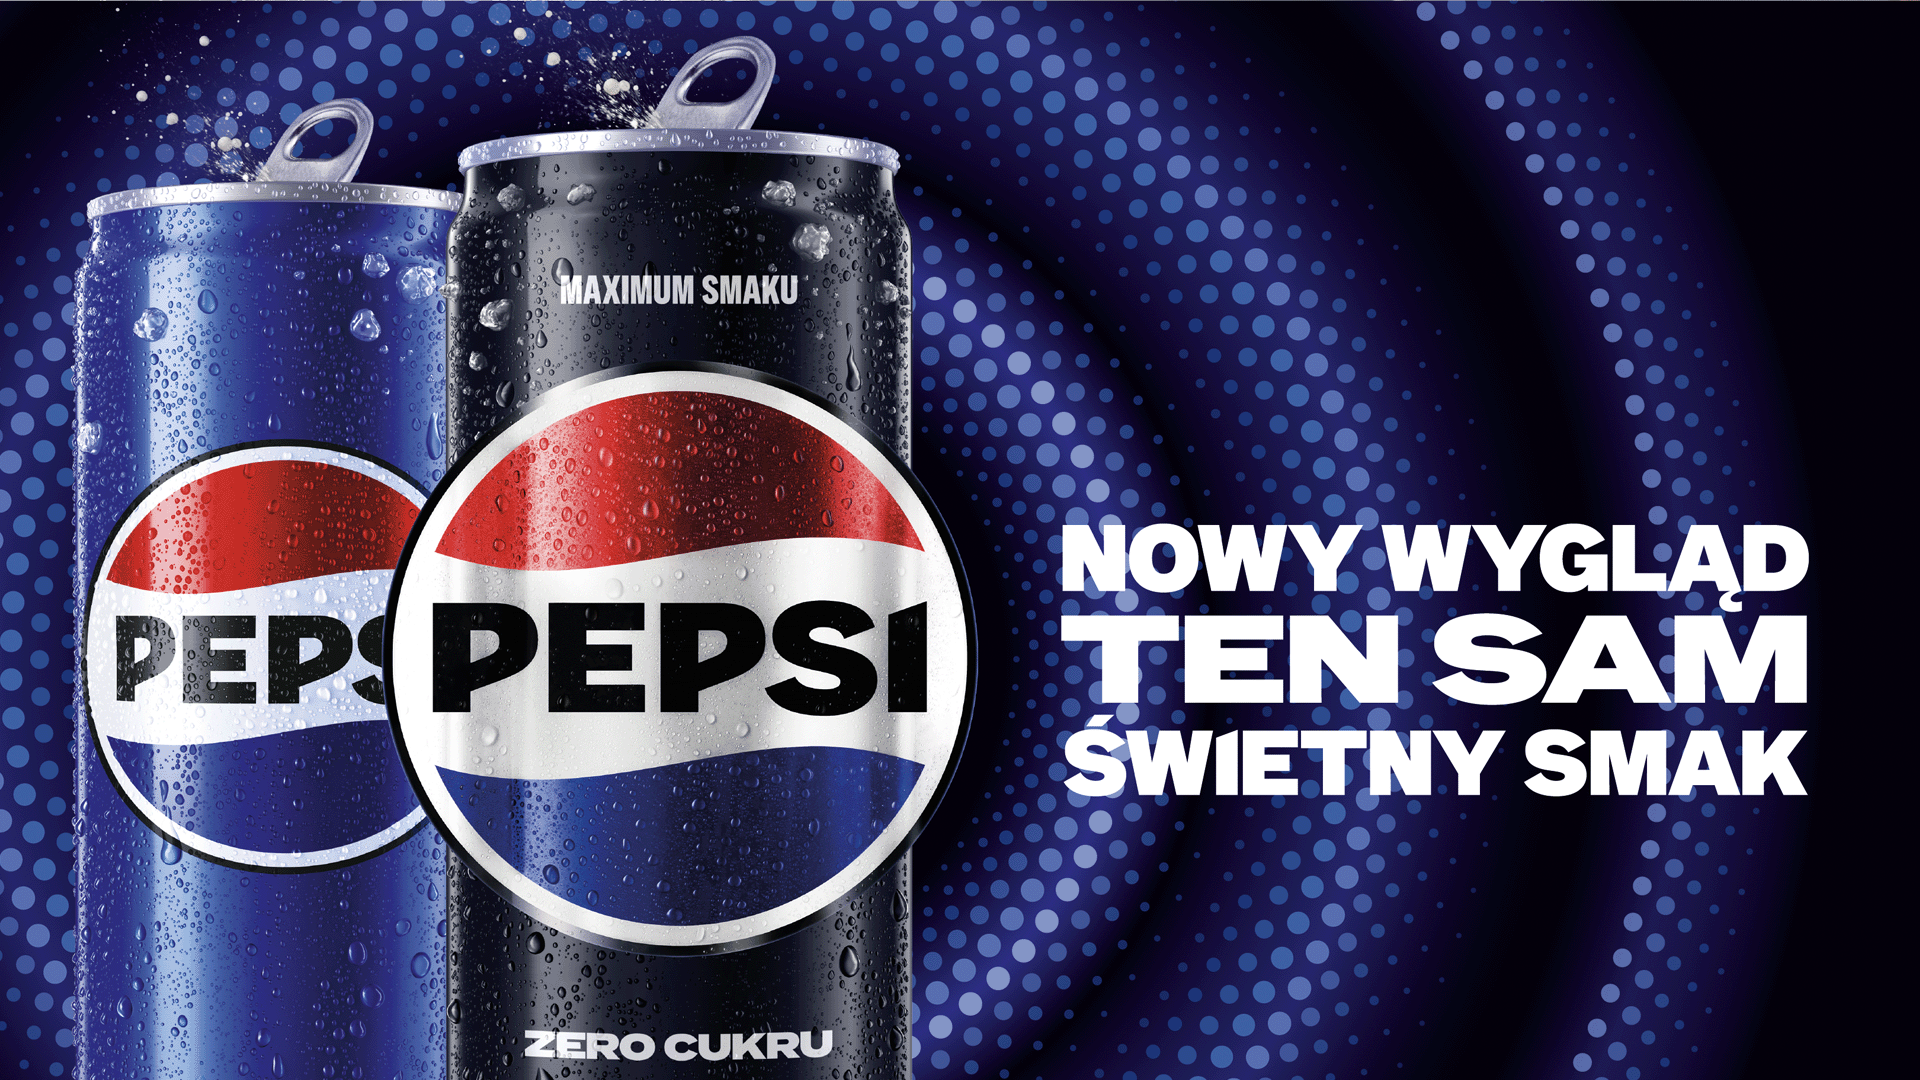 Pepsi zaprezentowało nową kampanię napoje MEDIARUN.COM PEPSI COLA KAMPANIA REKLAMOWA V1